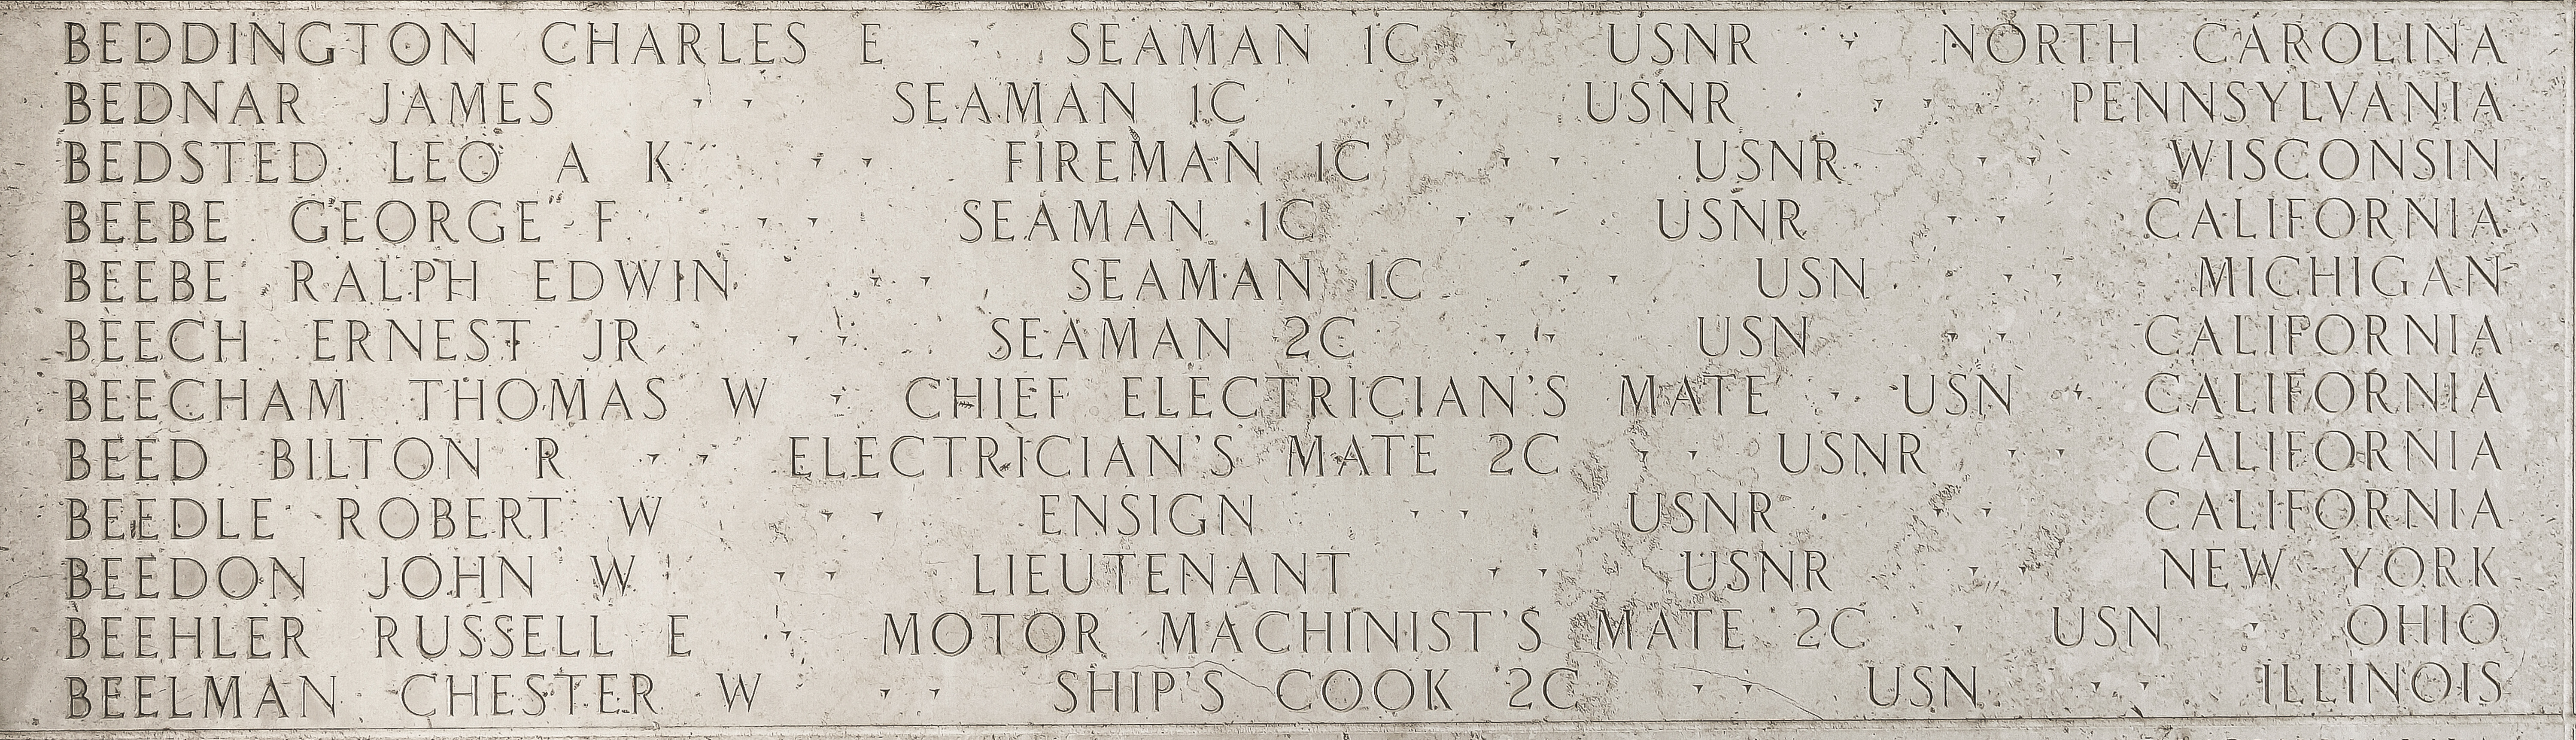 Chester W. Beelman, Ship's Cook Second Class